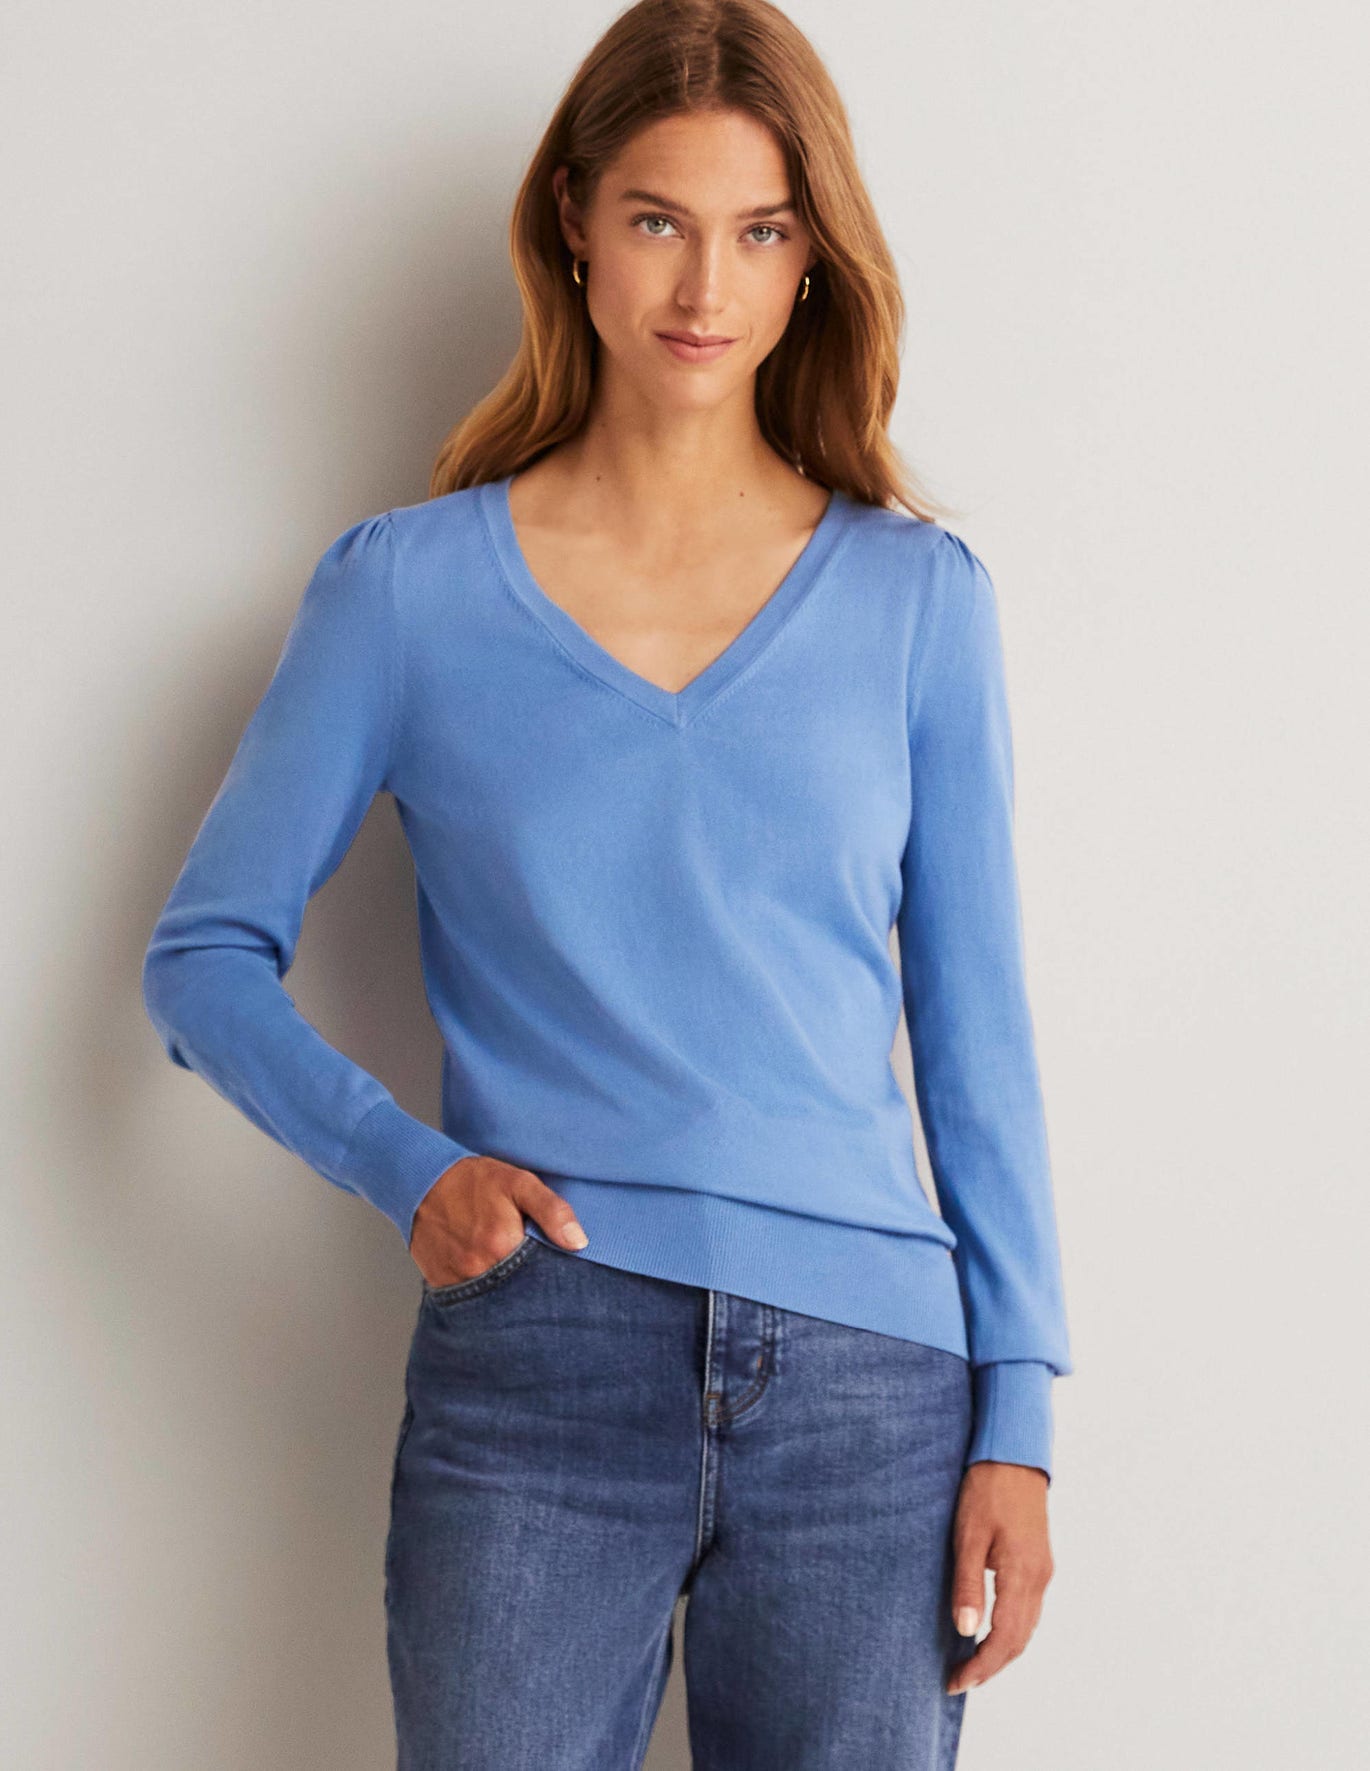 Boden Cotton V-Neck Sweater - Riviera Blue